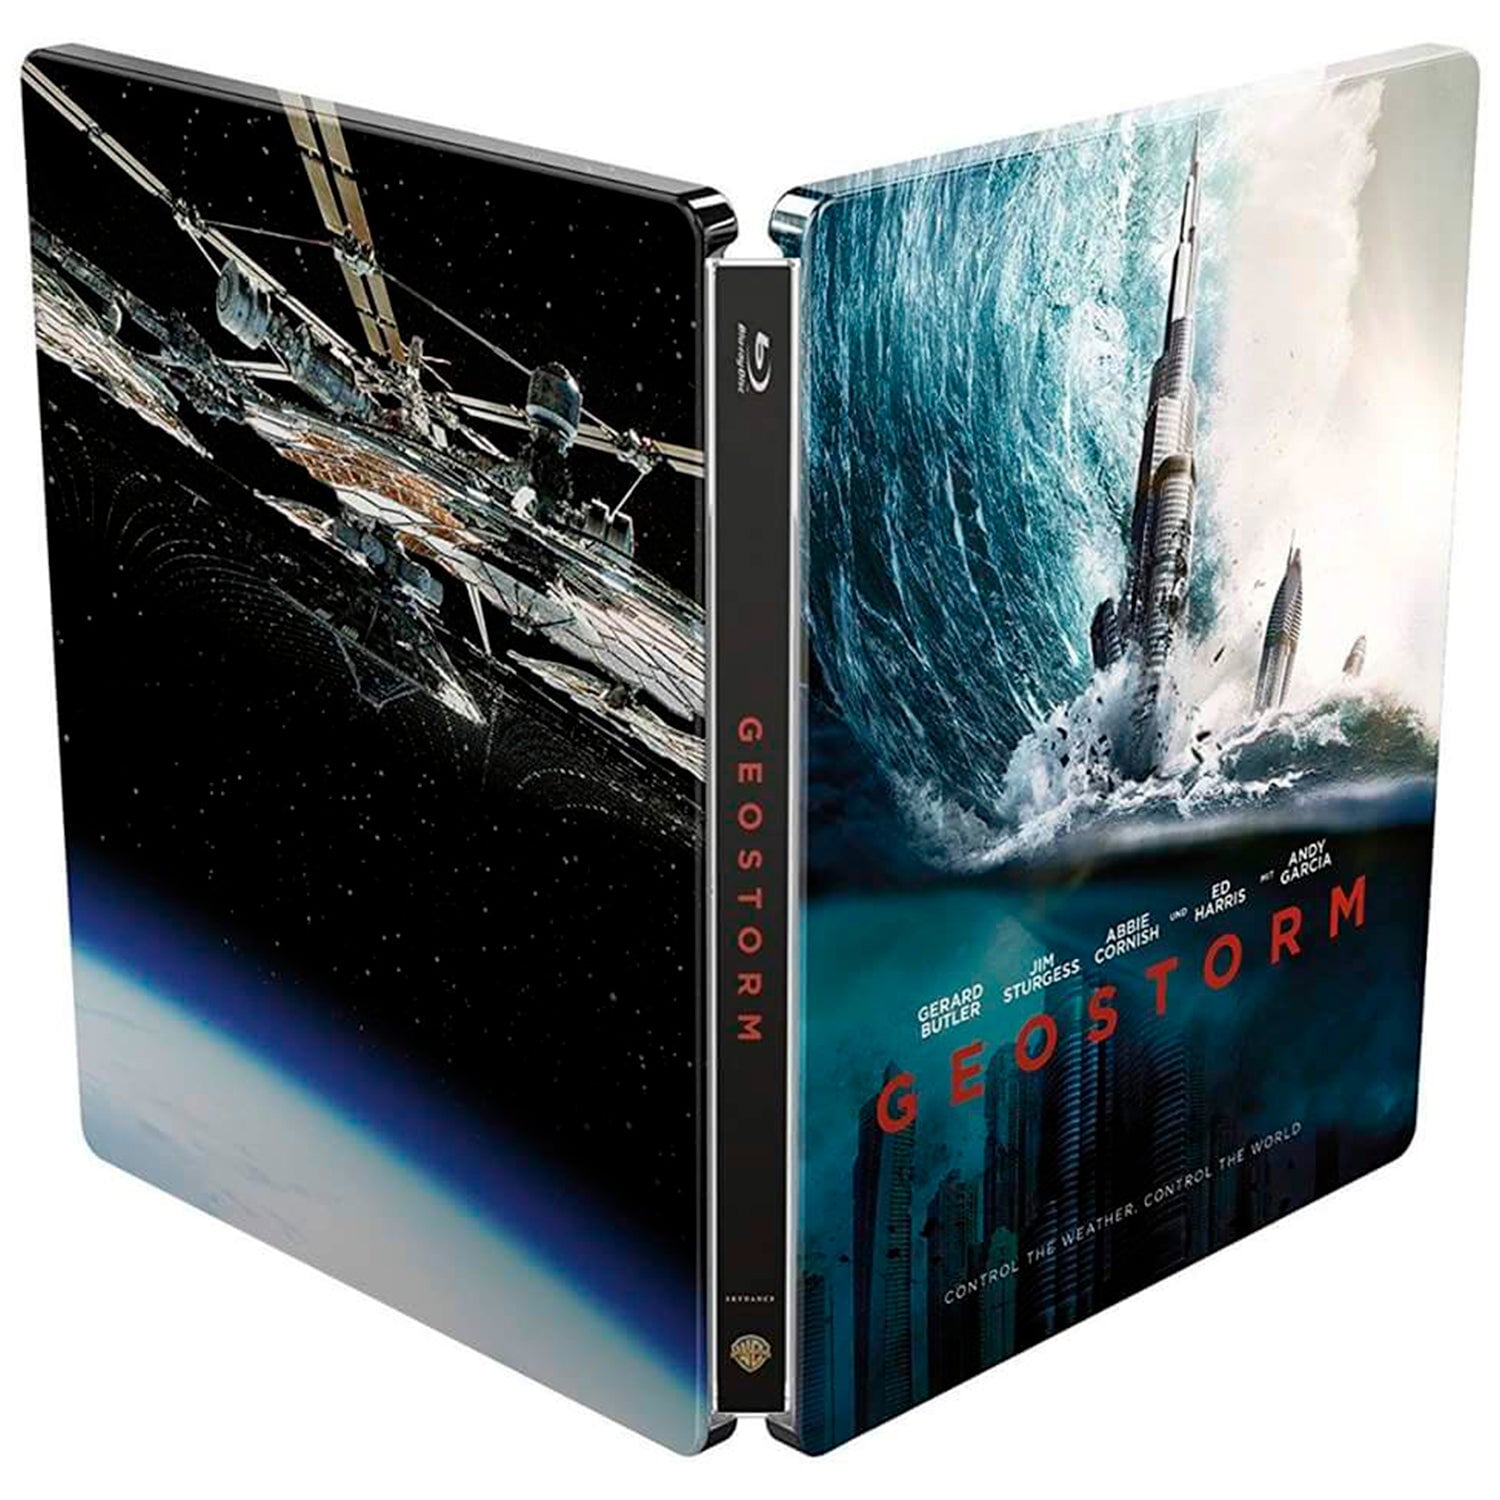 Геошторм 3D + 2D (2 Blu-ray) Steelbook